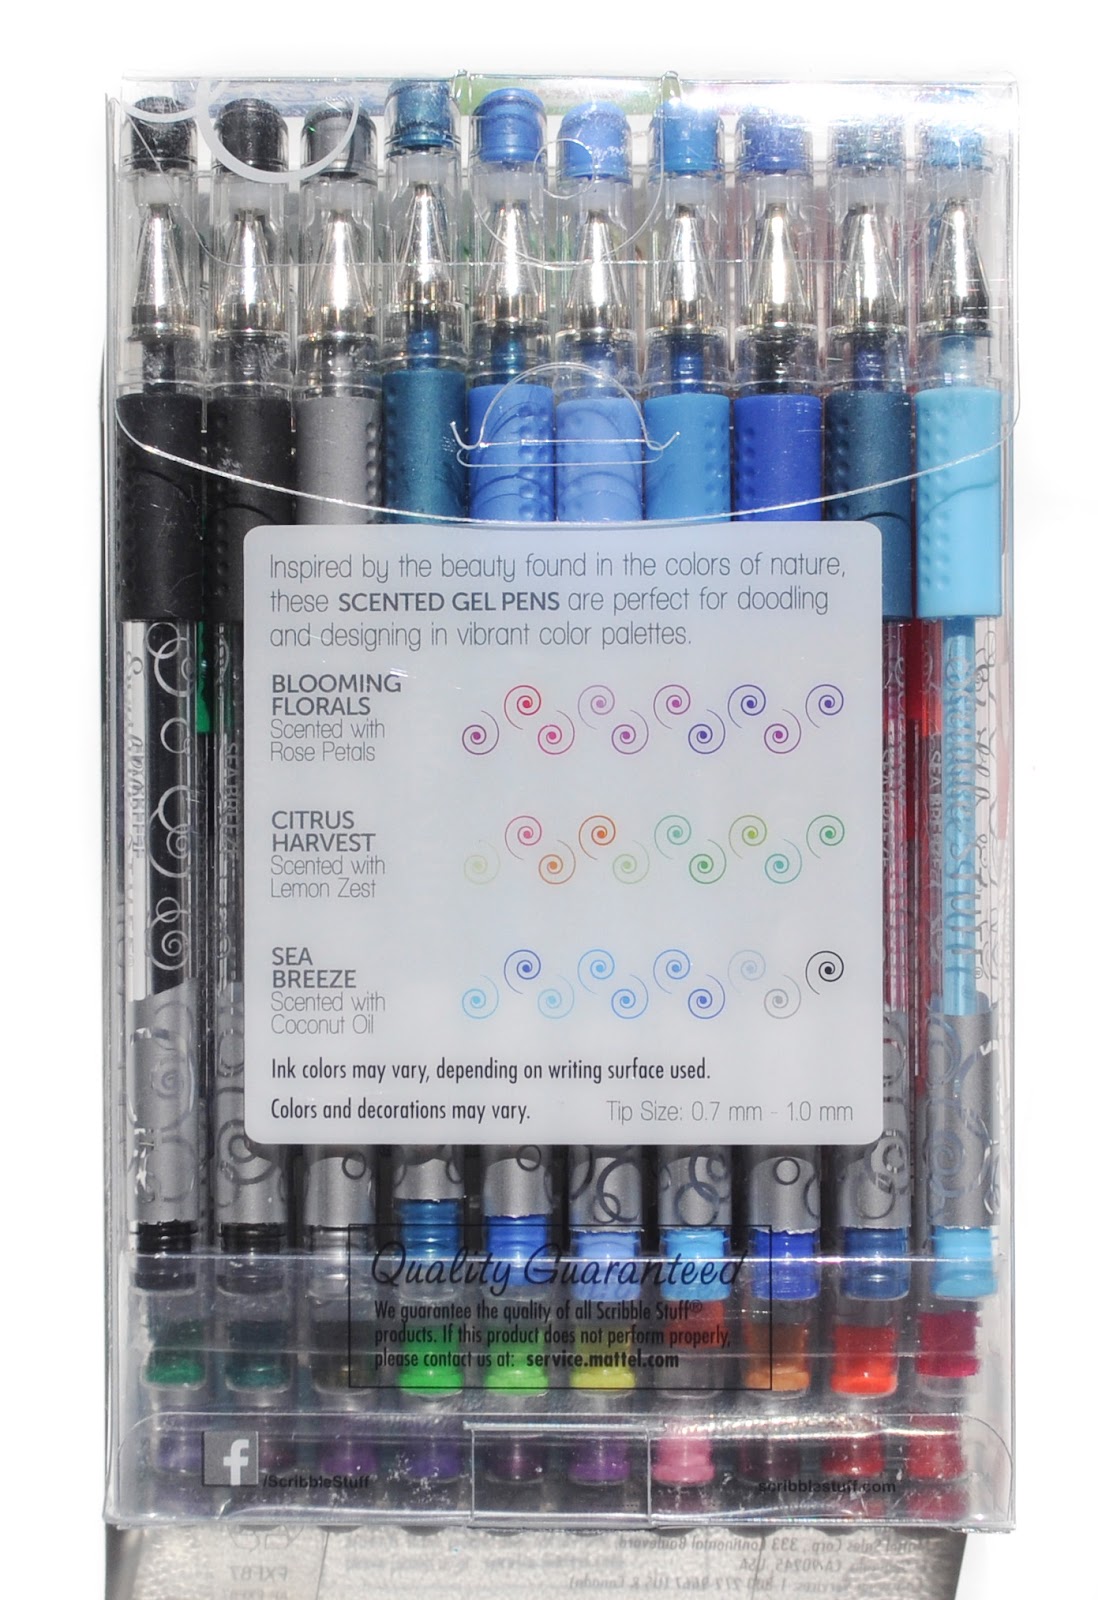 Scribble Stuff 32ct gel pens tower in bright fun colors, an